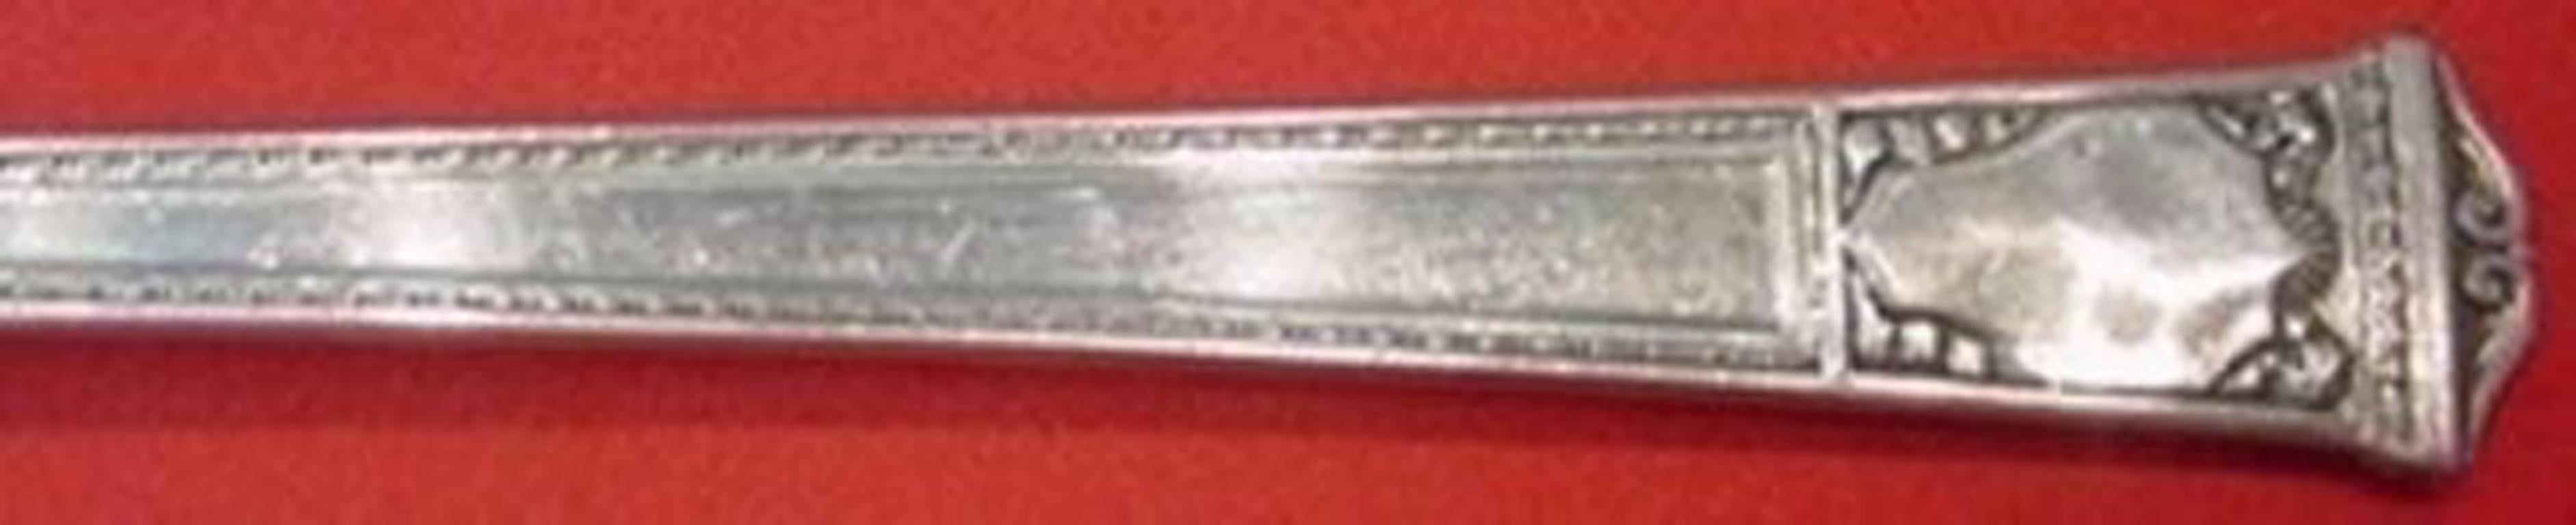 Sterling silver preserve spoon, 7 1/8